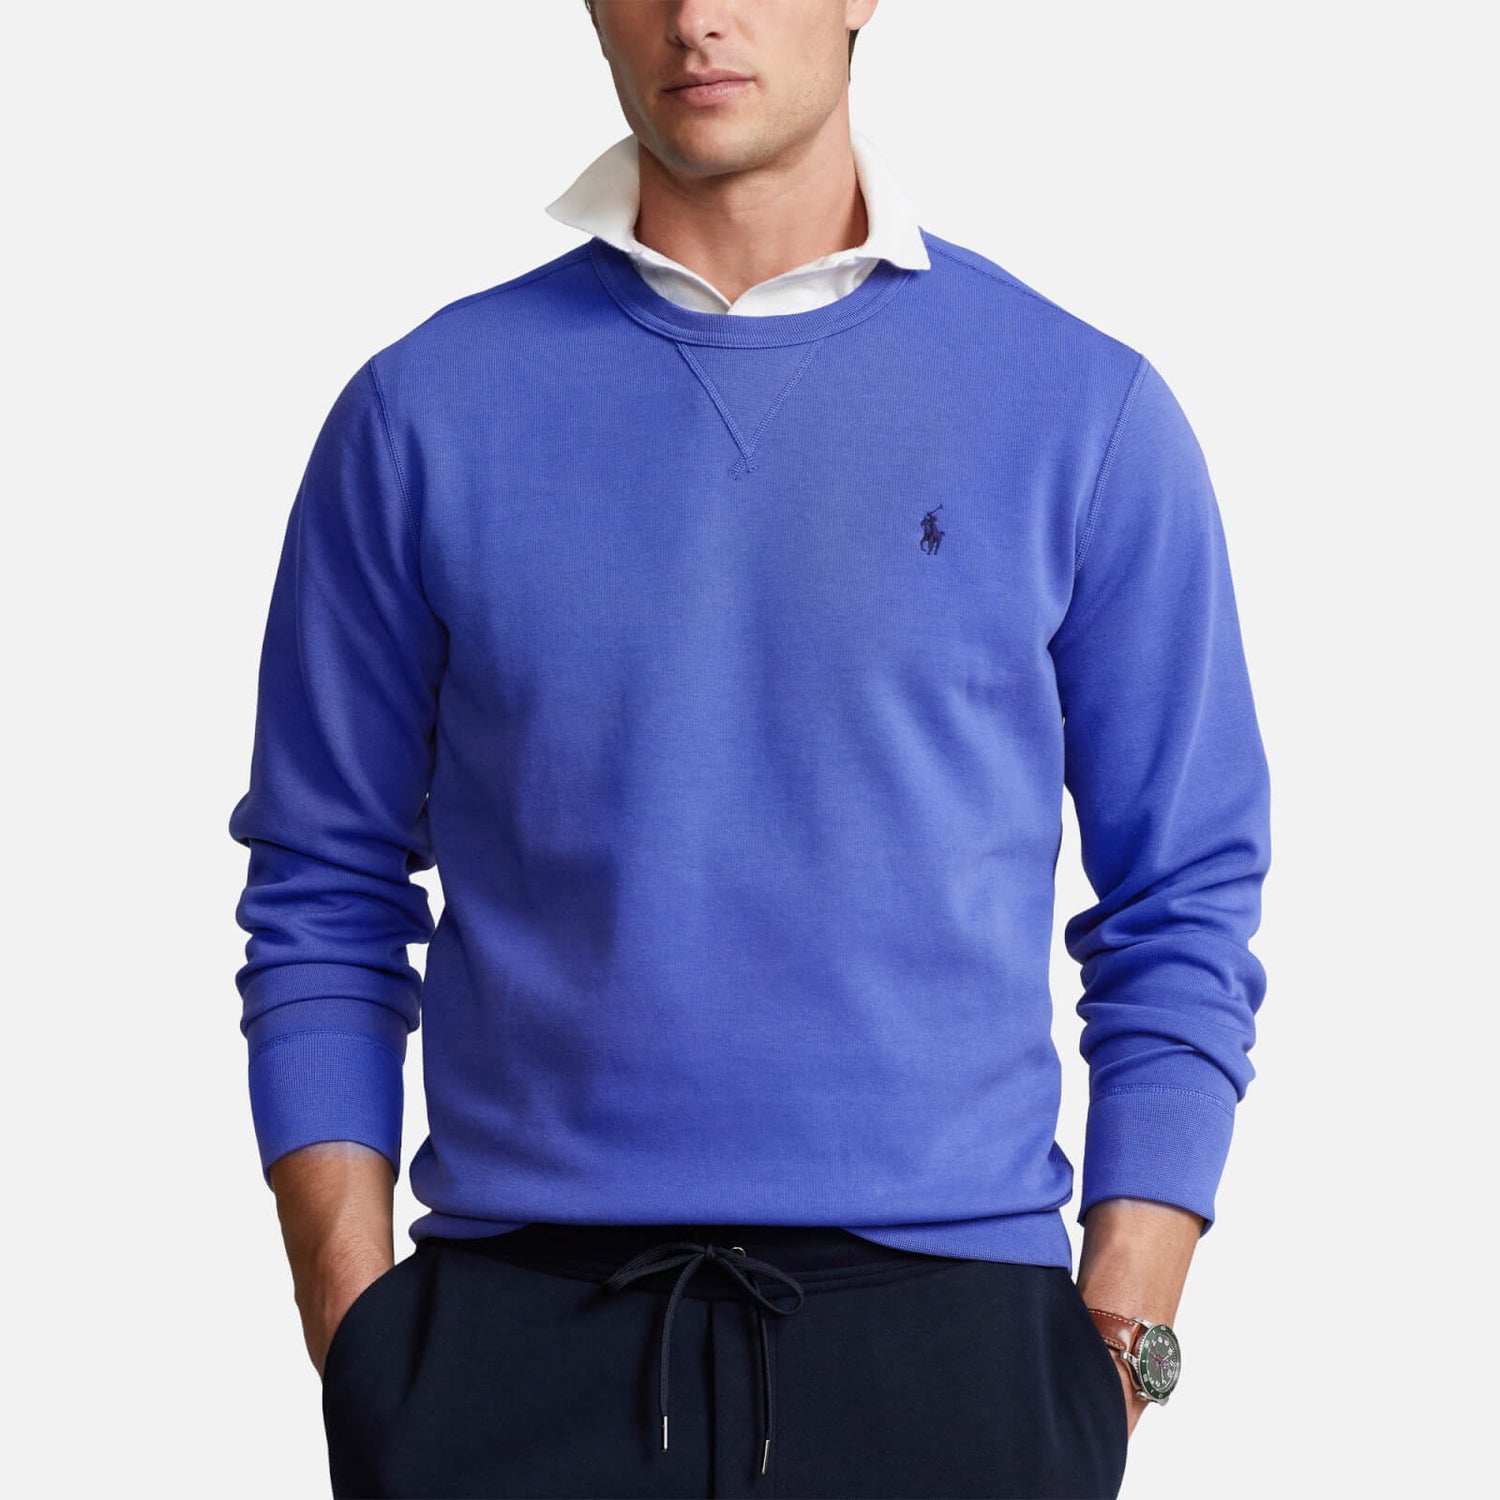 Polo Ralph Lauren Men's Double Knit Sweatshirt - Liberty Blue - S